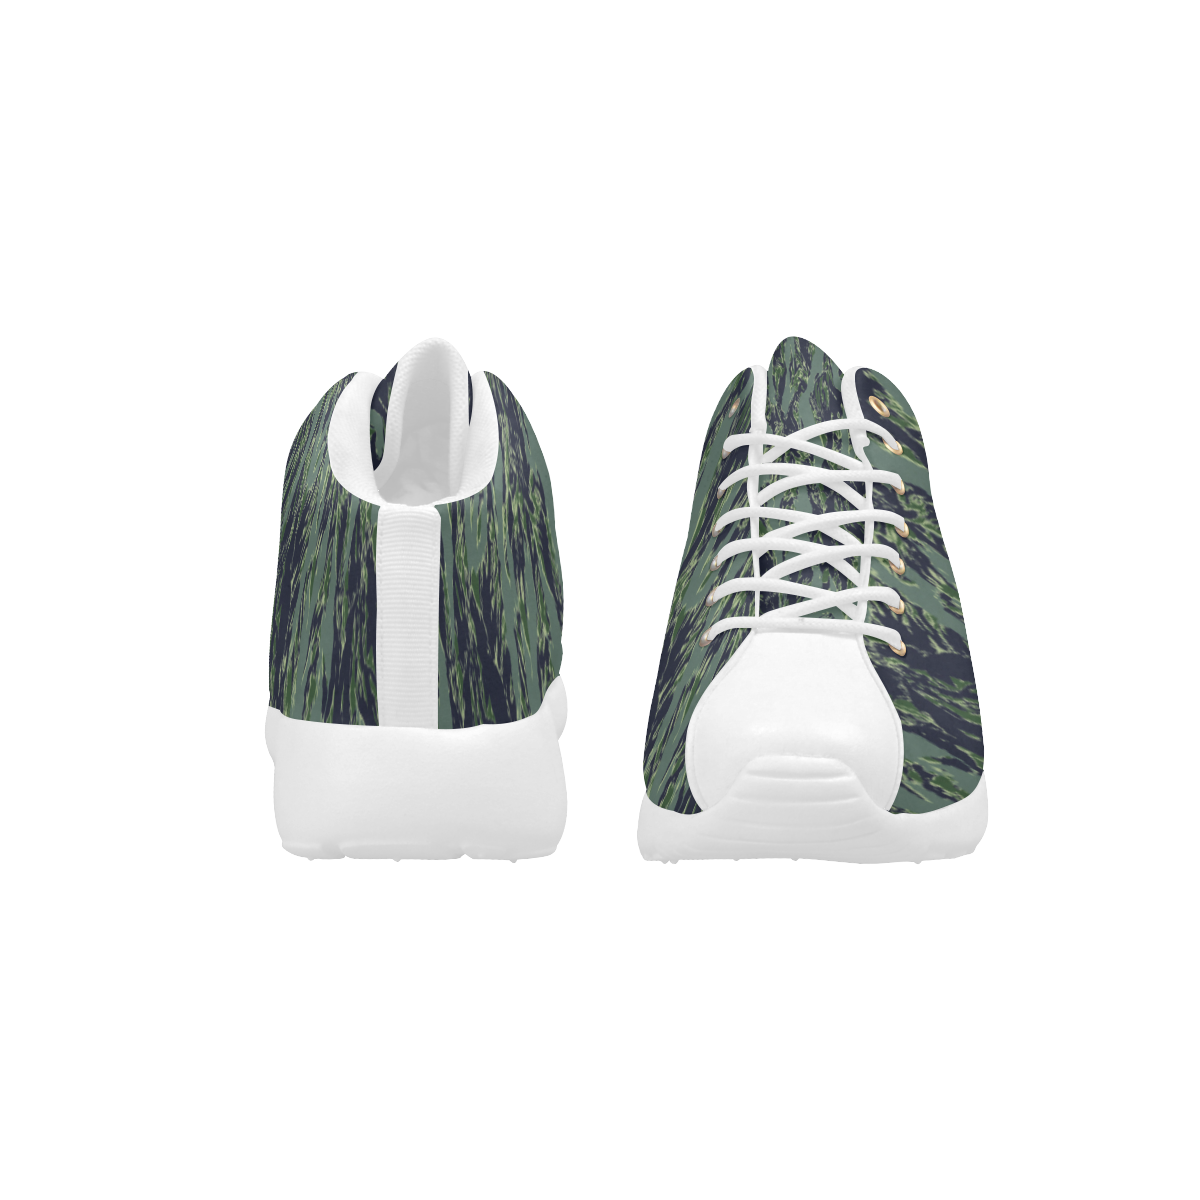 Jungle Tiger Stripe Green Camouflage Men's Basketball Training Shoes (Model 47502)